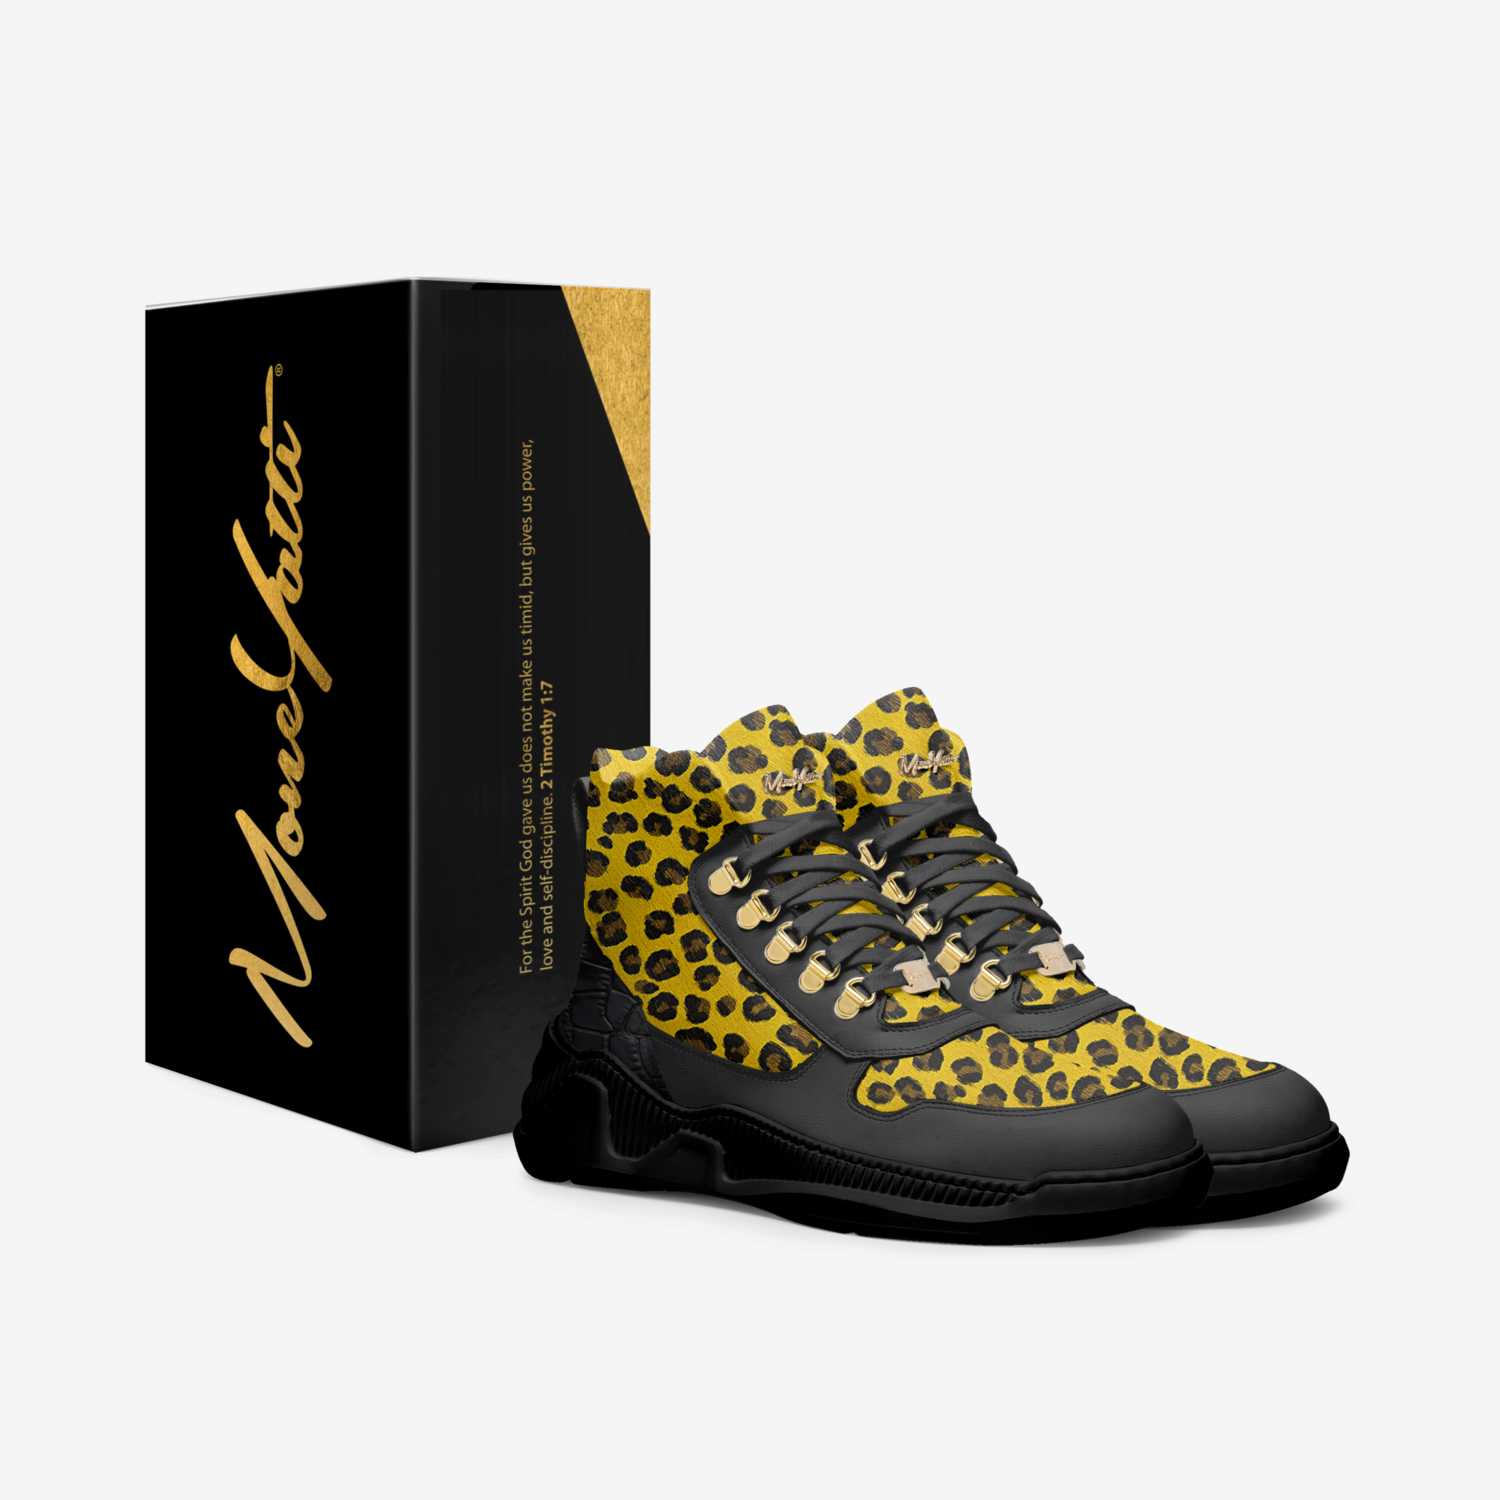 MONEYATTI TRAPS302 custom made in Italy shoes by Moneyatti Brand | Box view